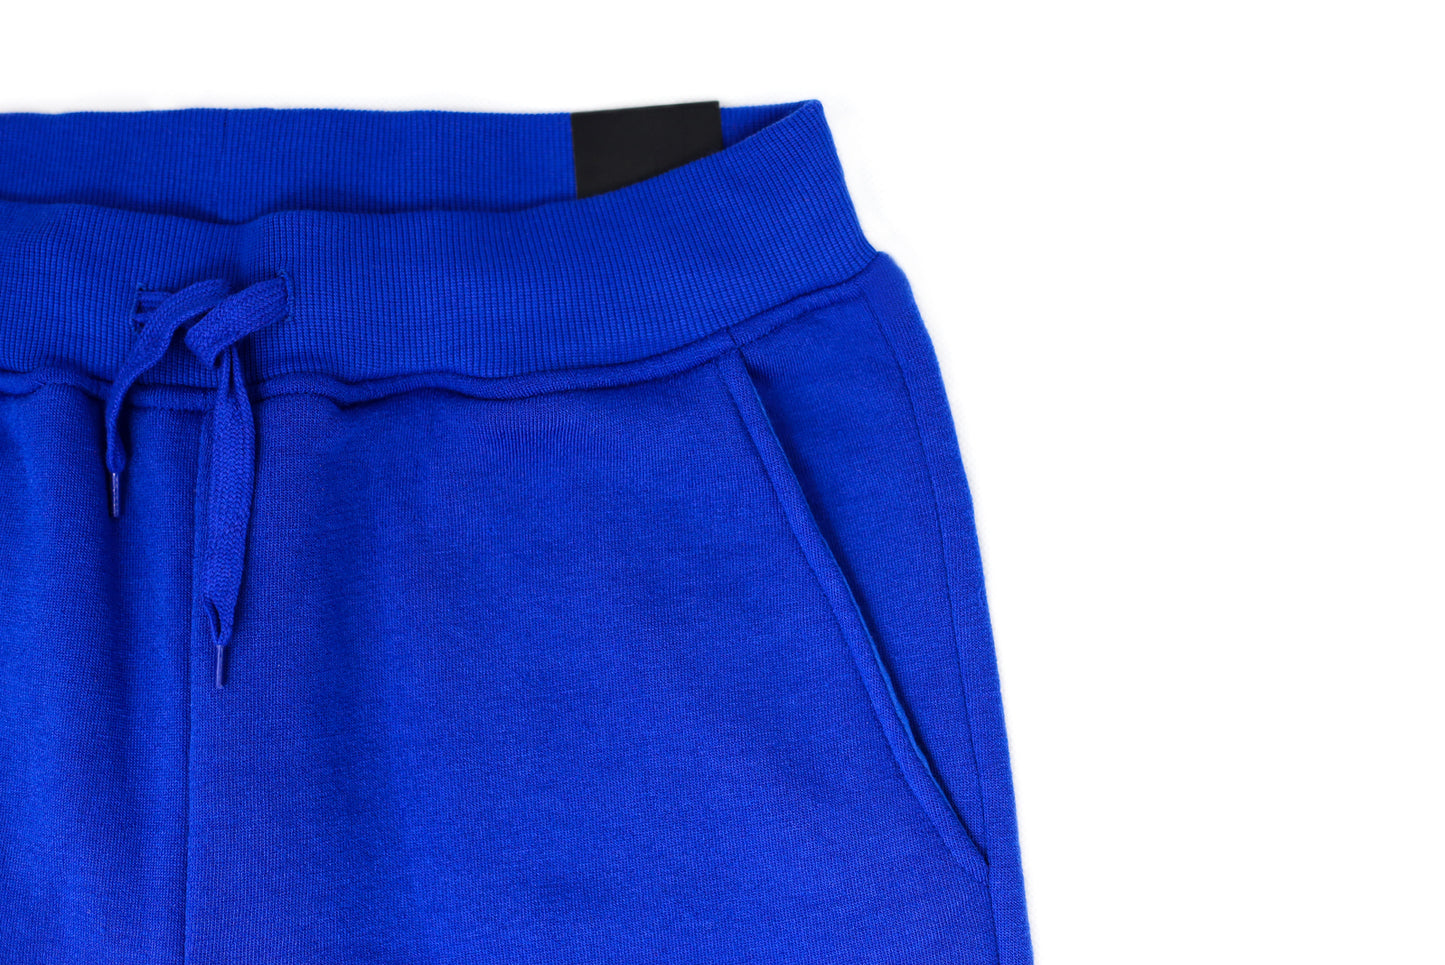 Mens Skinny Track Pants Joggers Trousers Gym Casual Sweat Cuffed Slim Trackies Fleece - Royal Blue - L